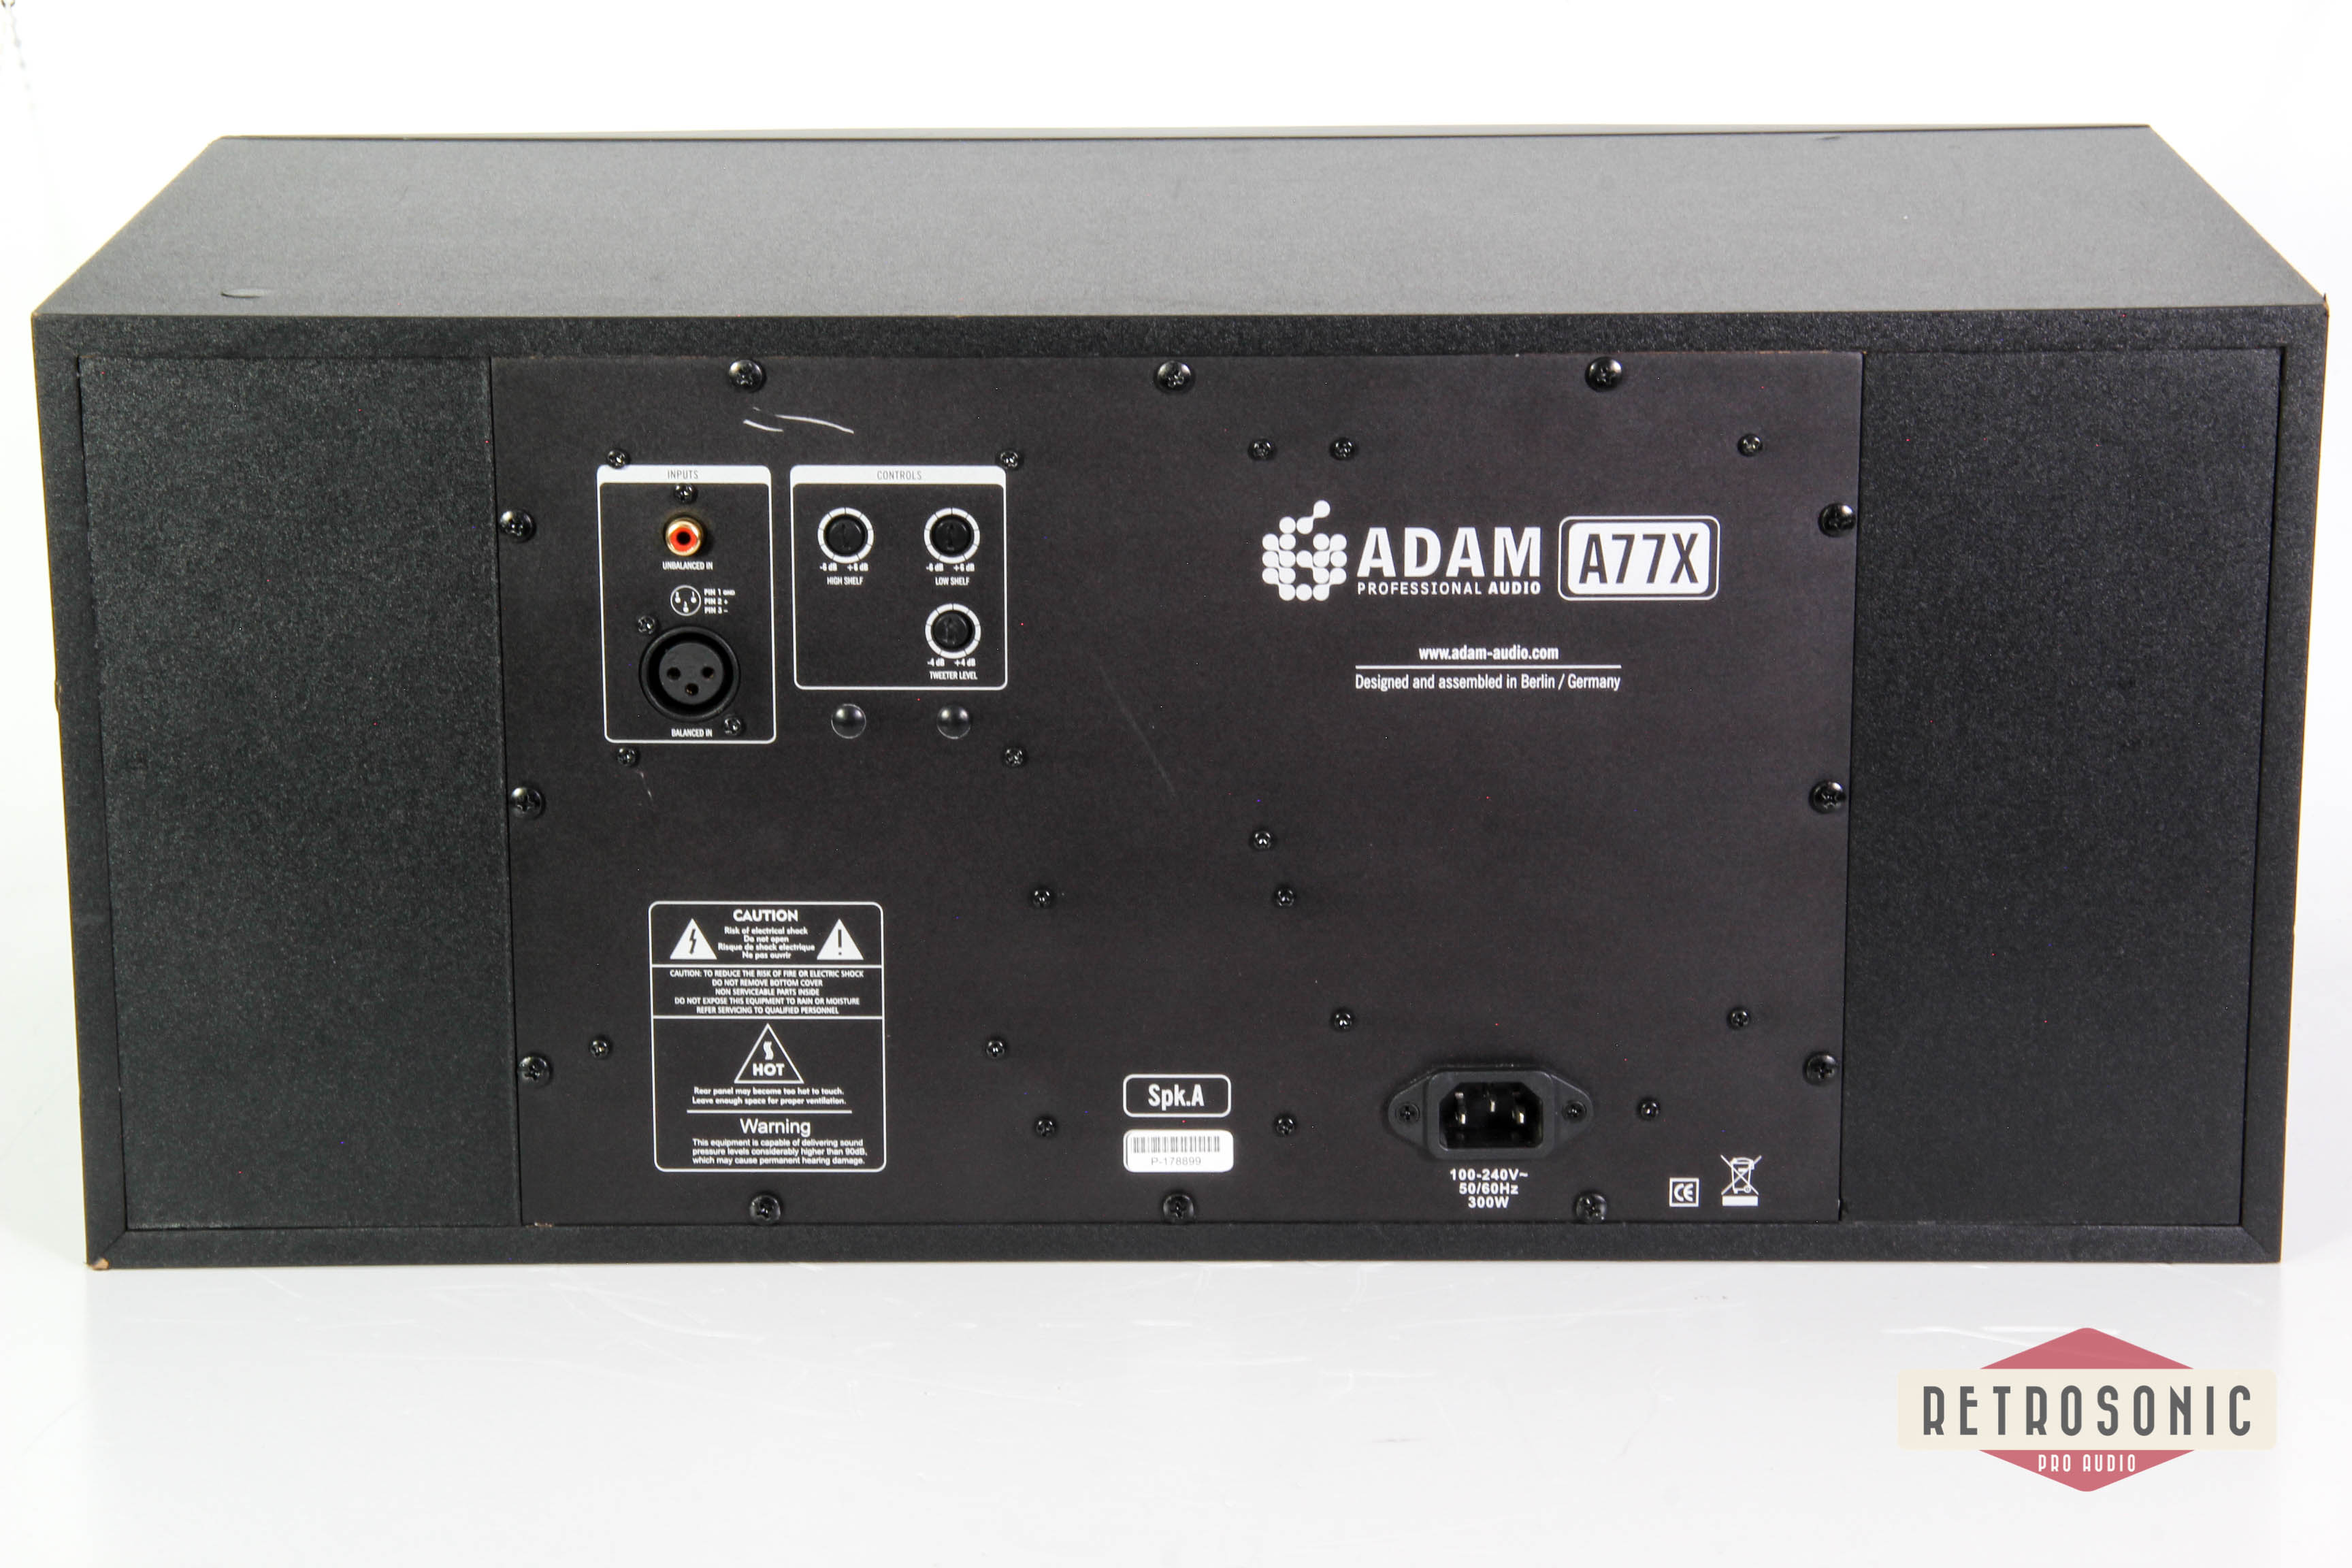 Adam A77x 3-way studio monitor pair